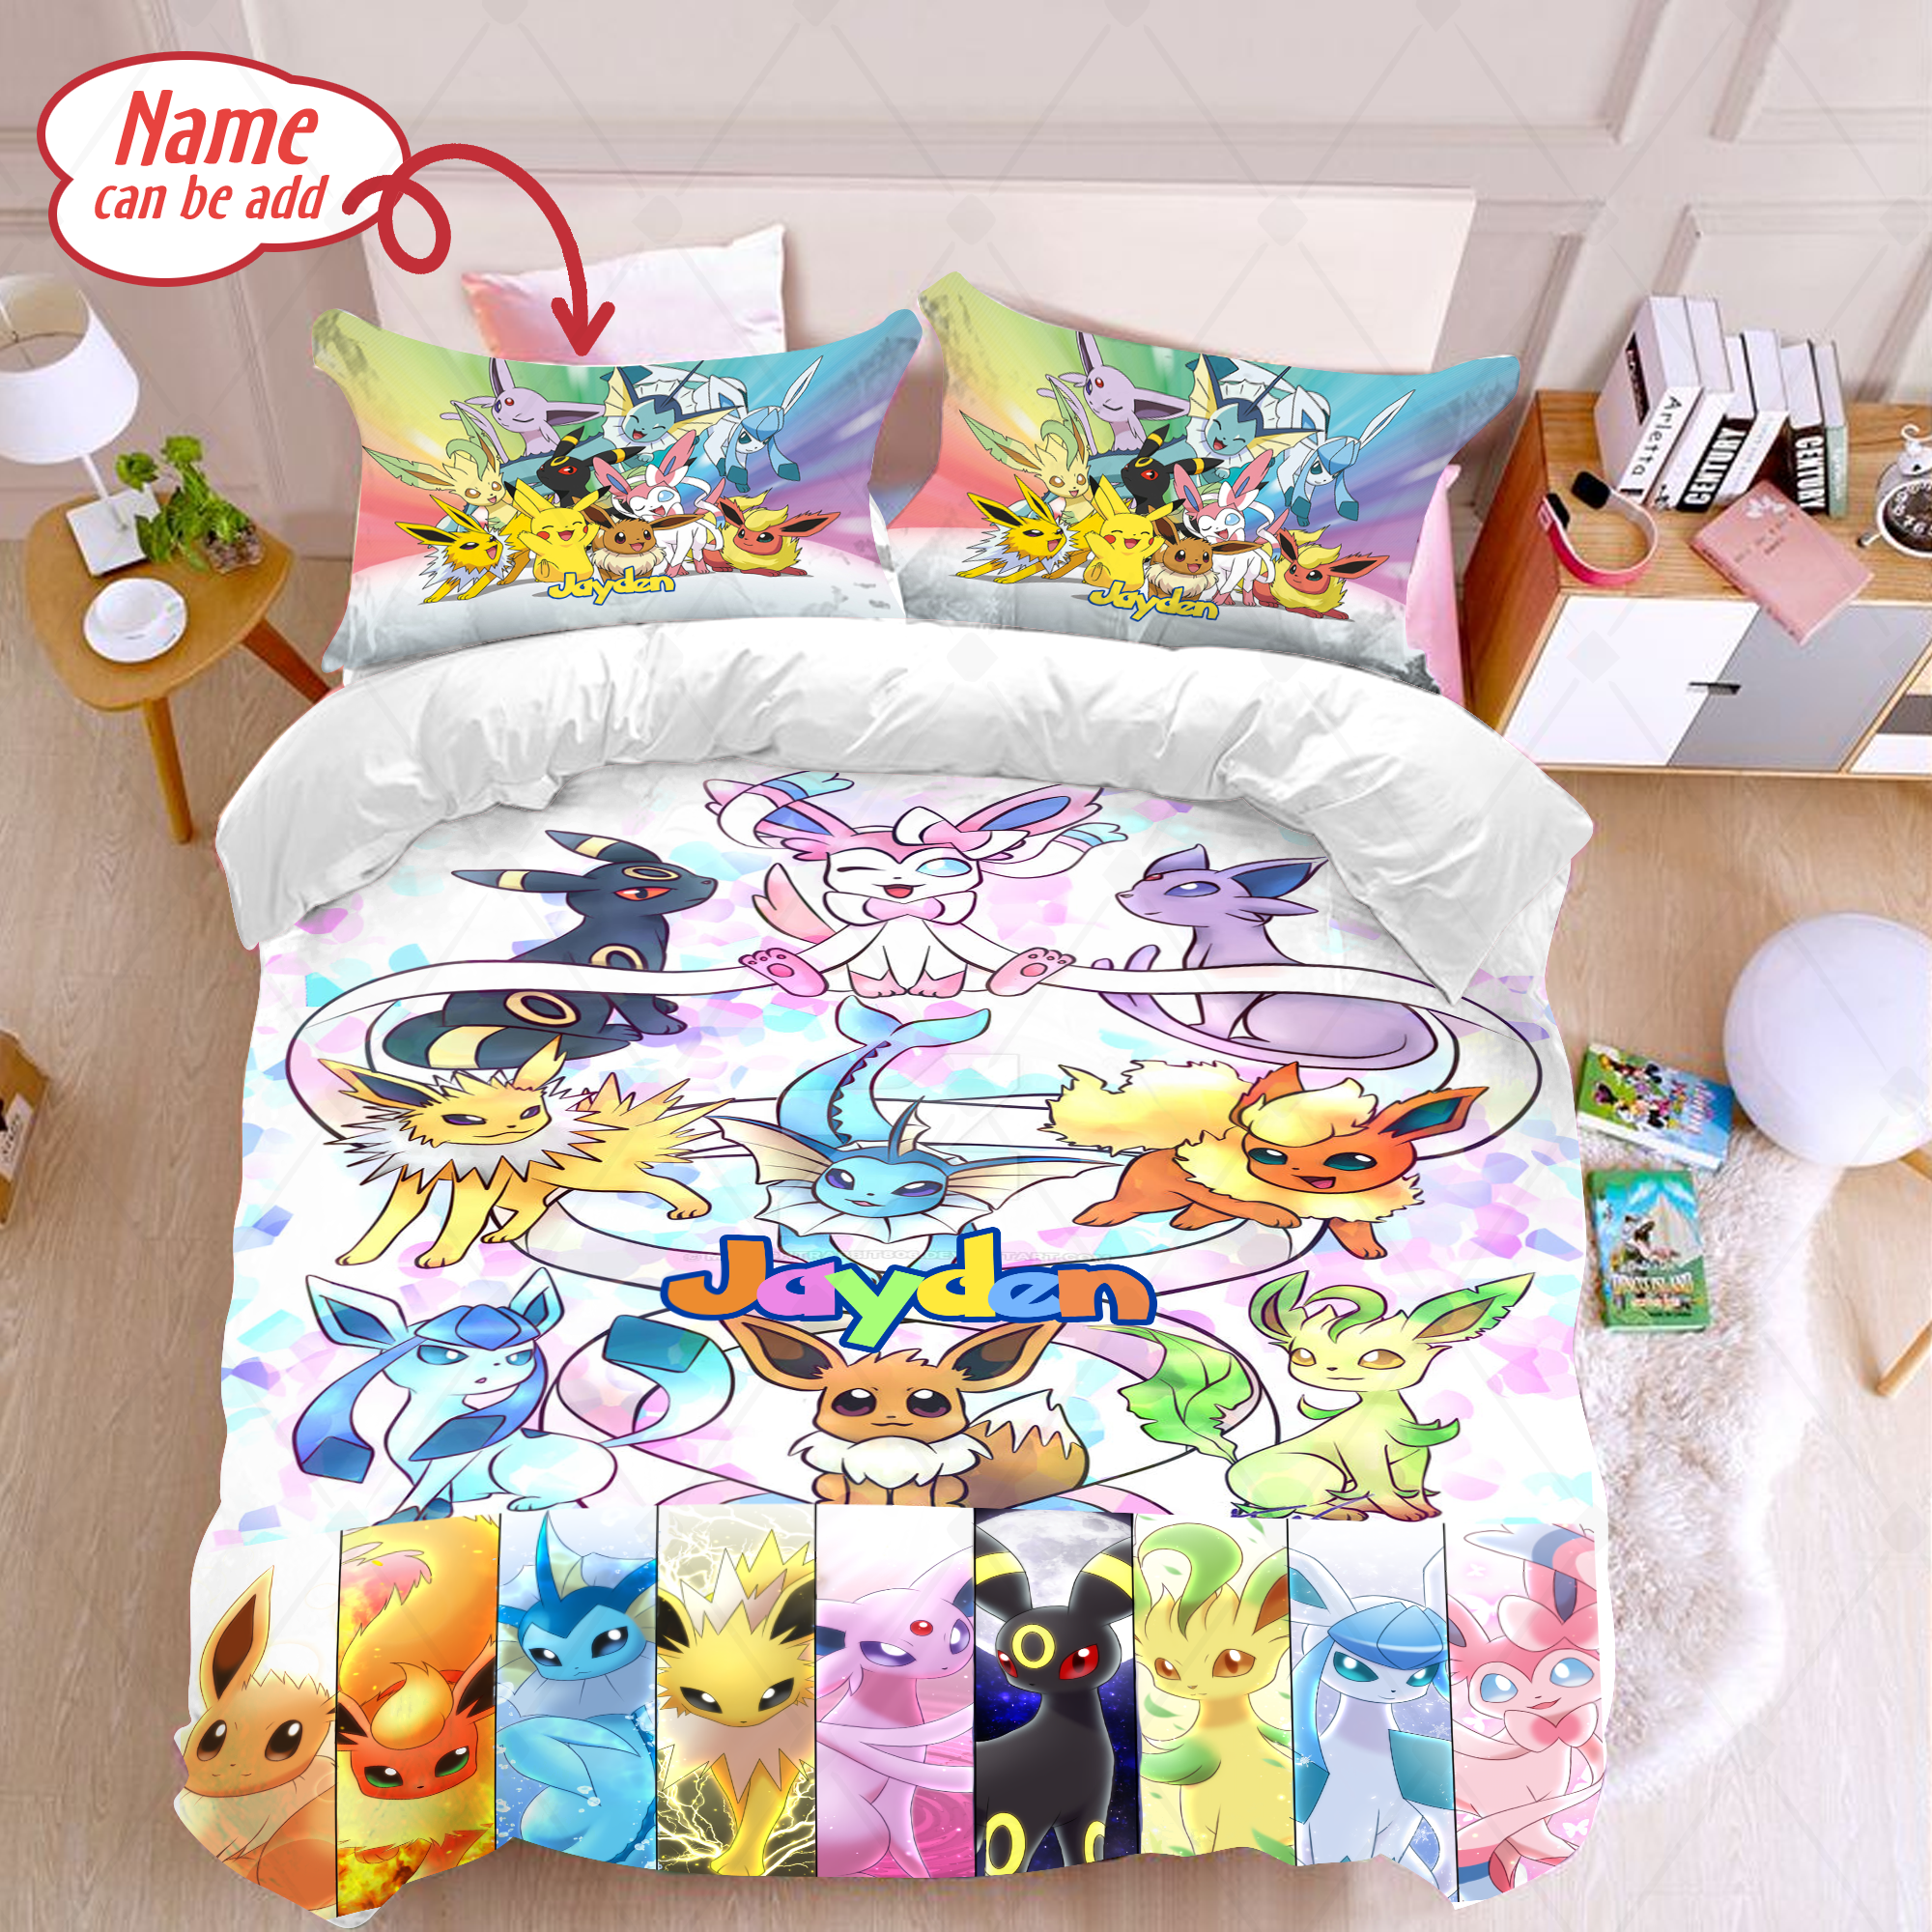 Personalized Eevee Pokemon Evolution Bedding Set Eevee Pokemon Duvet Cover And Pillowcase Eevee Pokemon Fleece Blanket